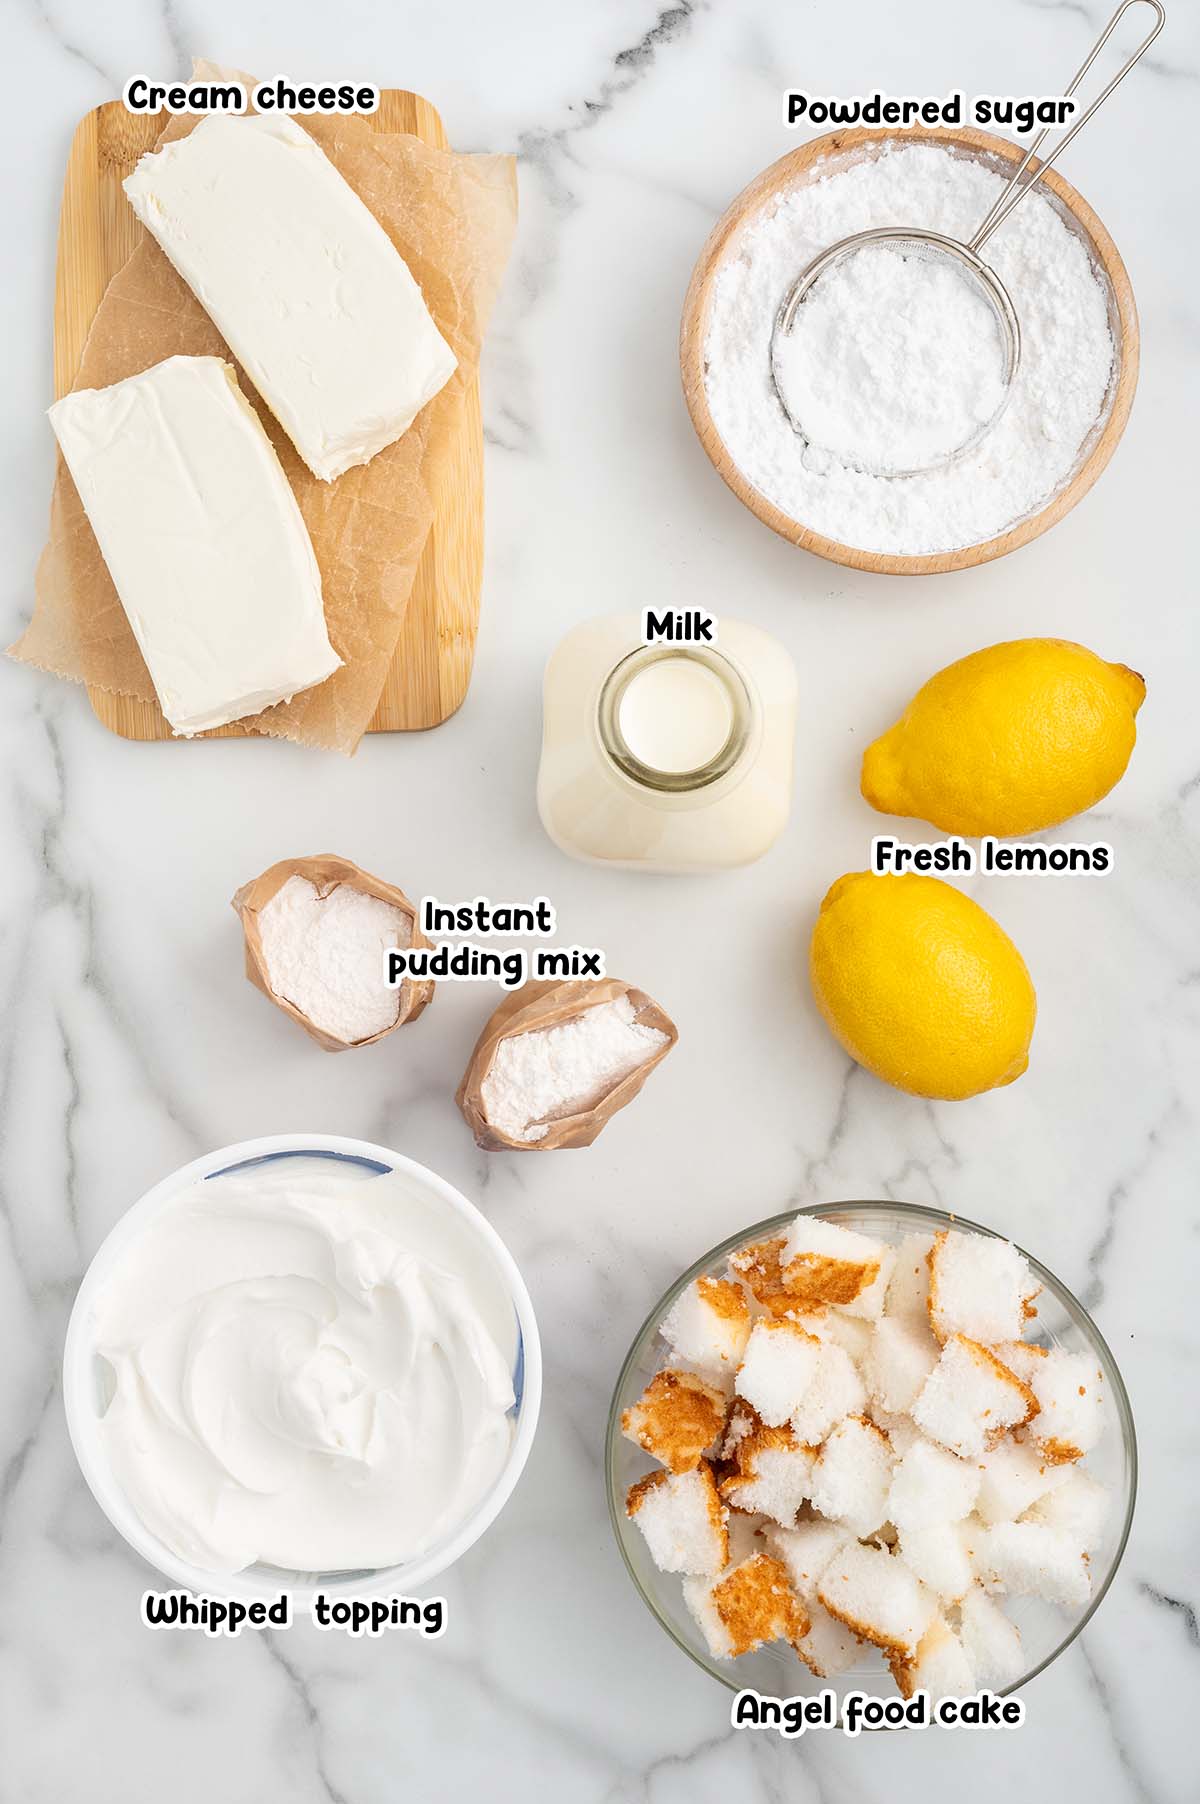 Lemon Trifle ingredients.